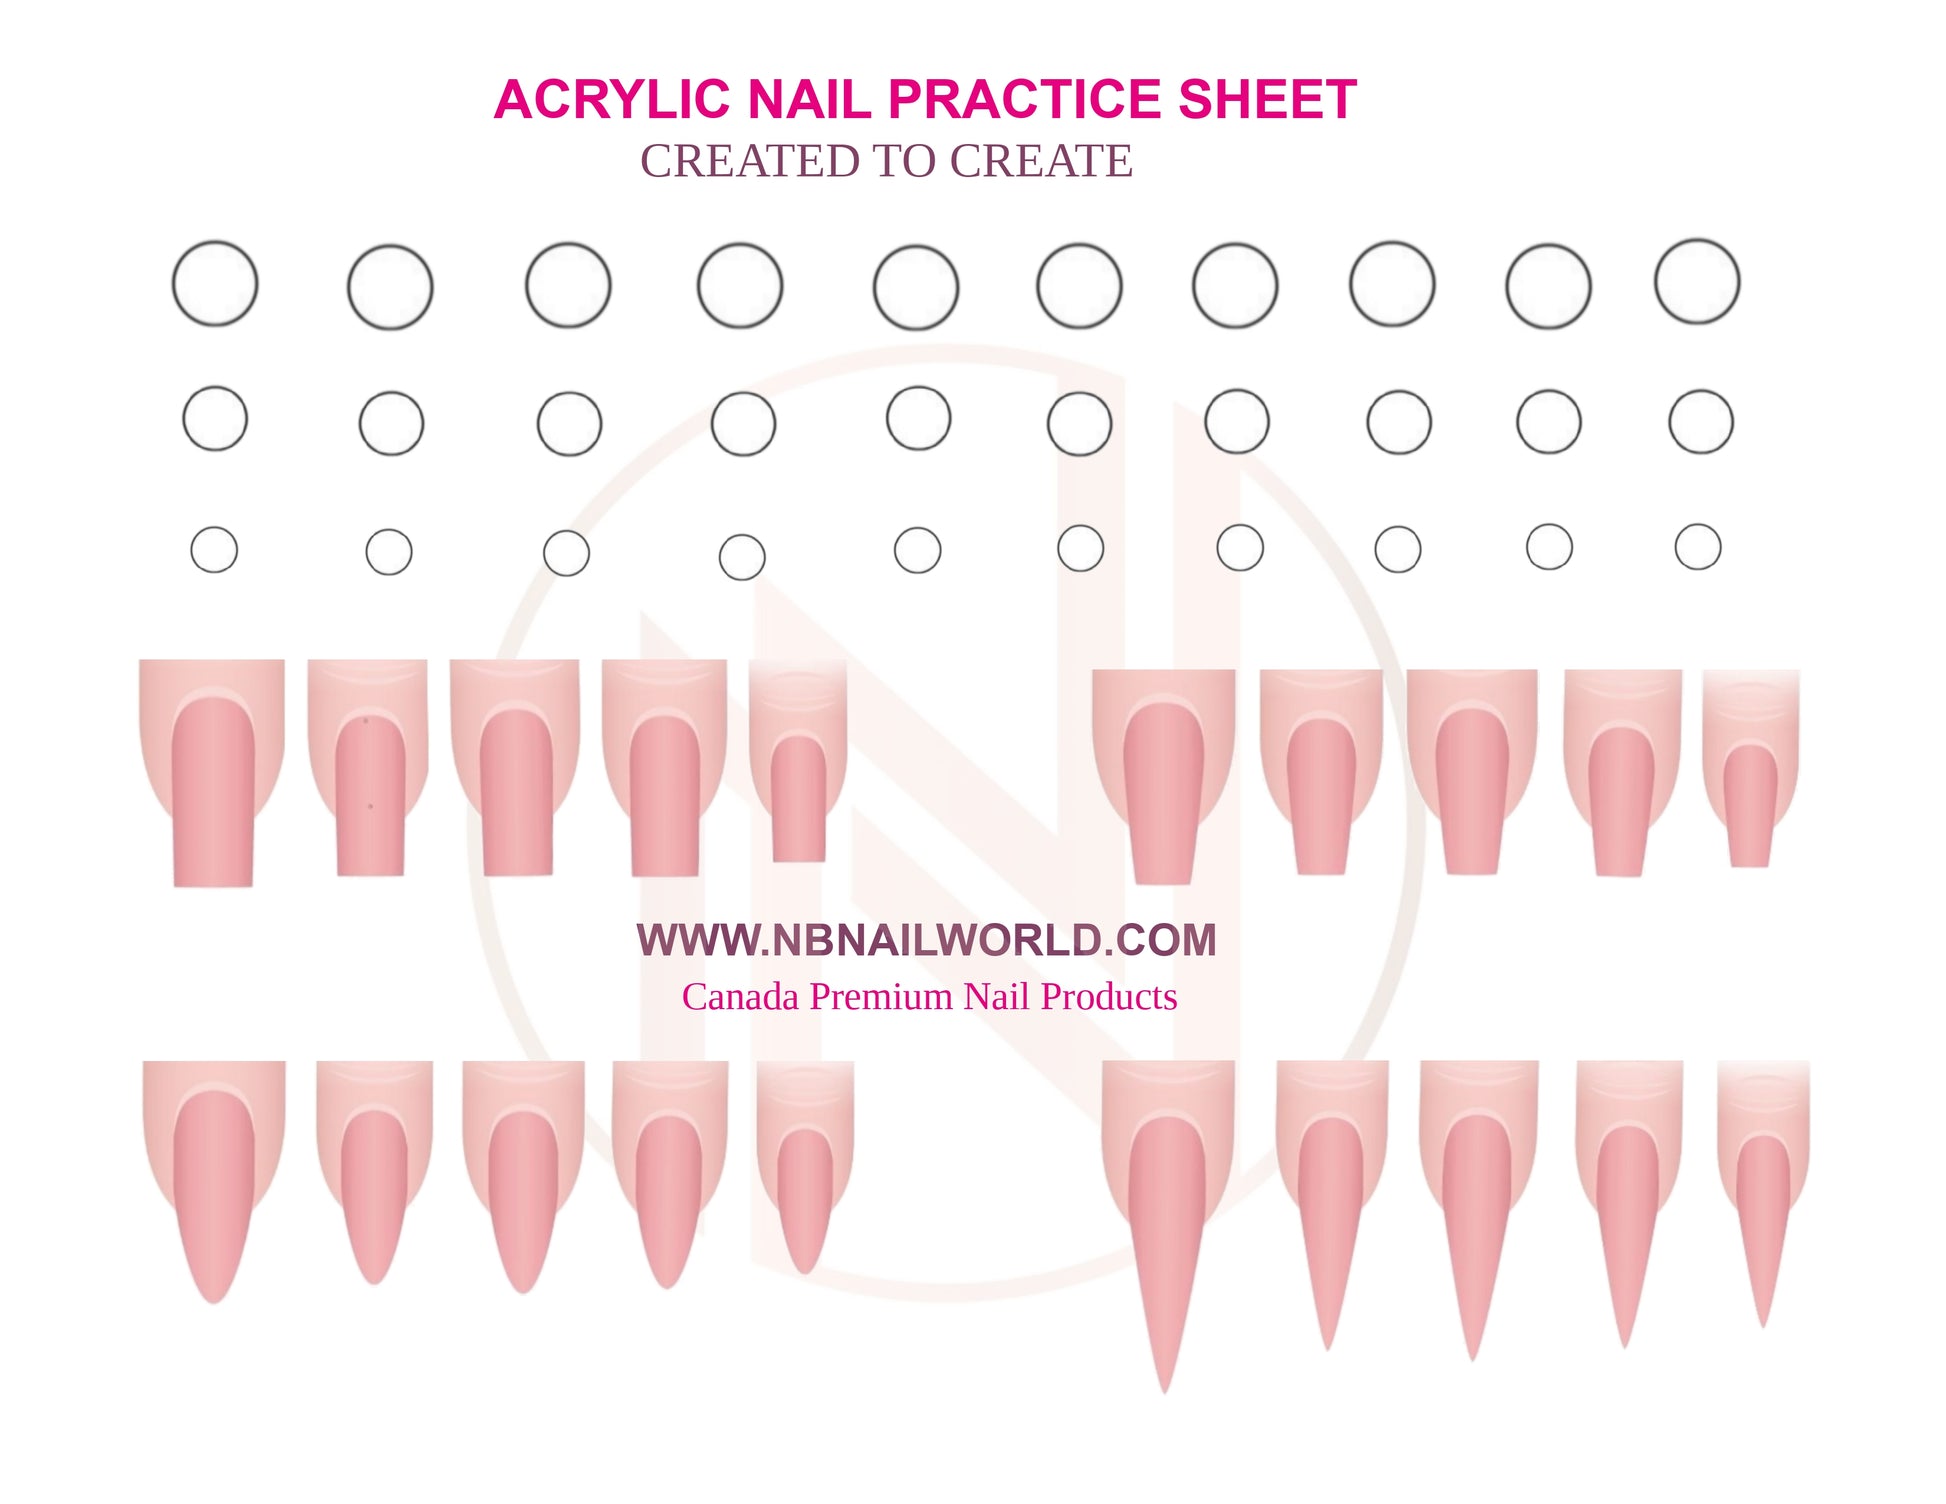 Acrylic nail practice sheet